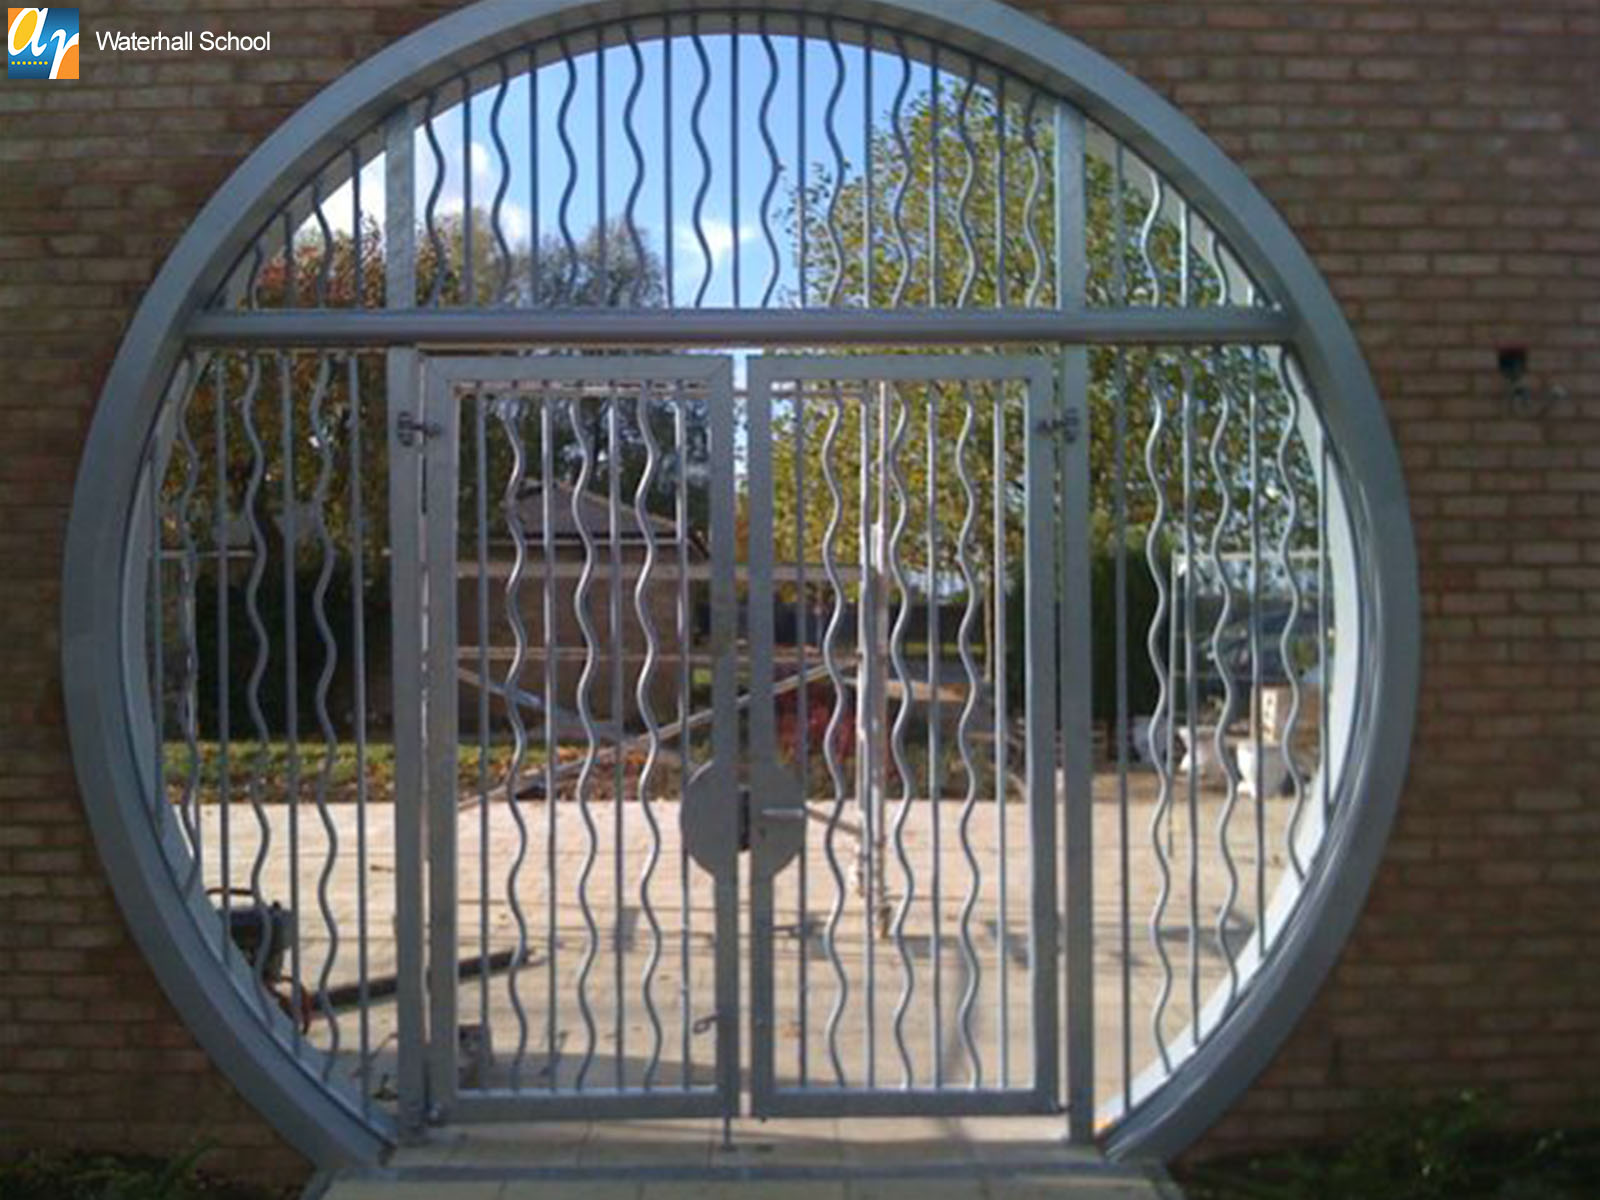 Waterhall School metal gates